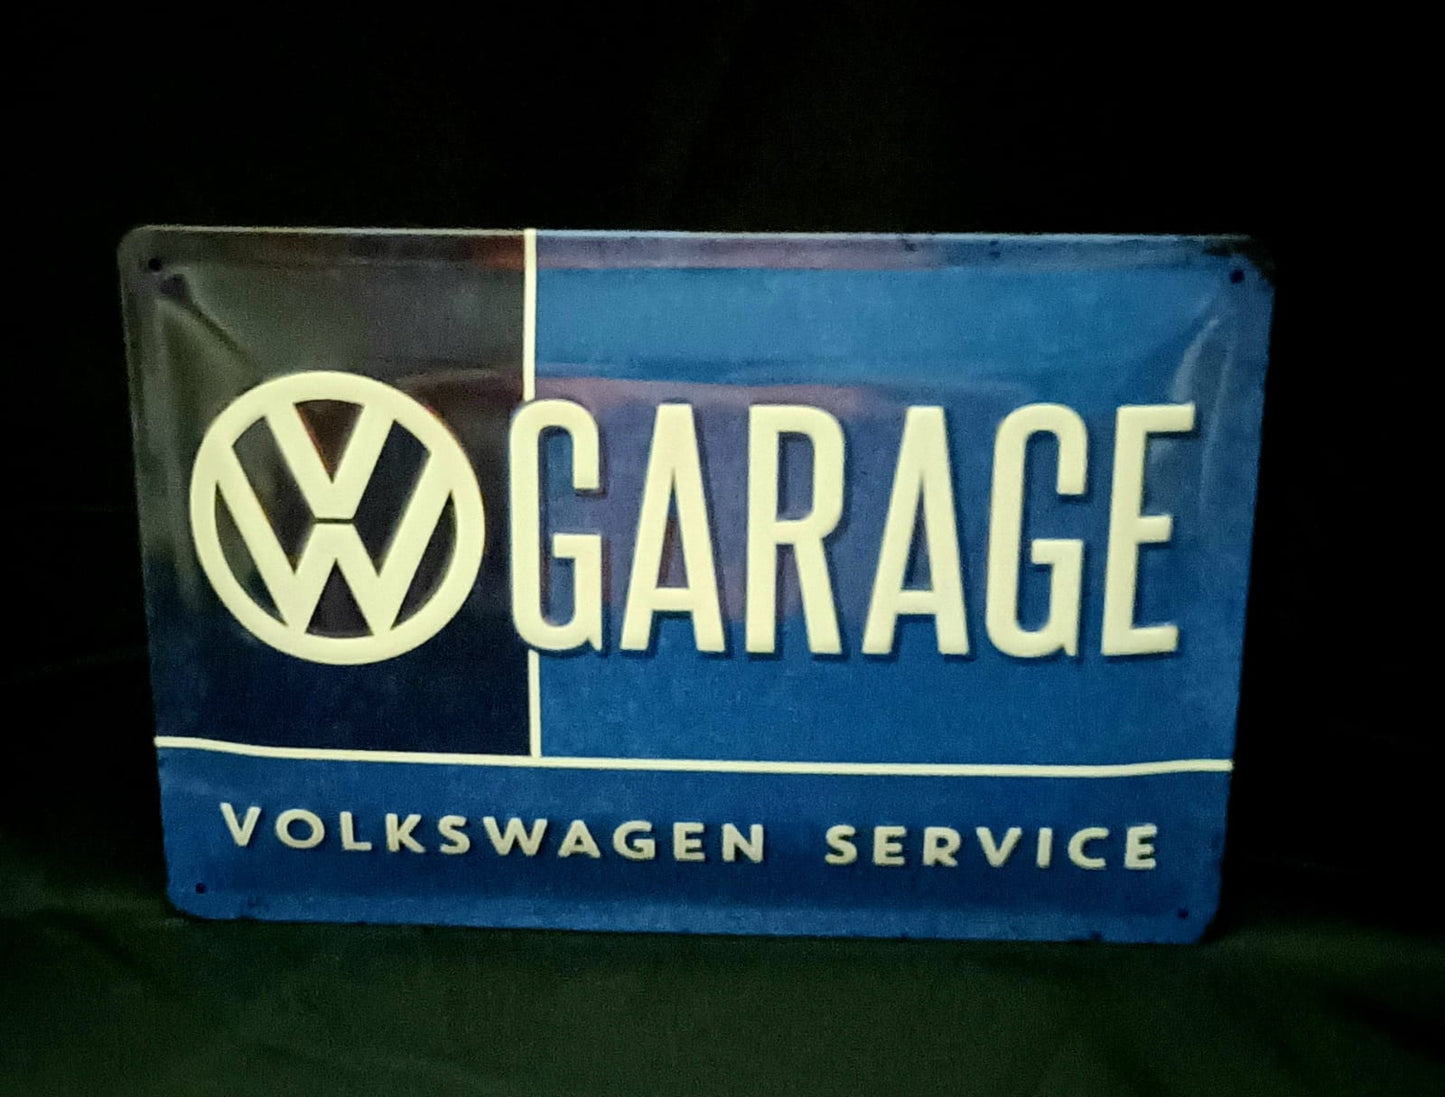 Blechschild "VW Garage"